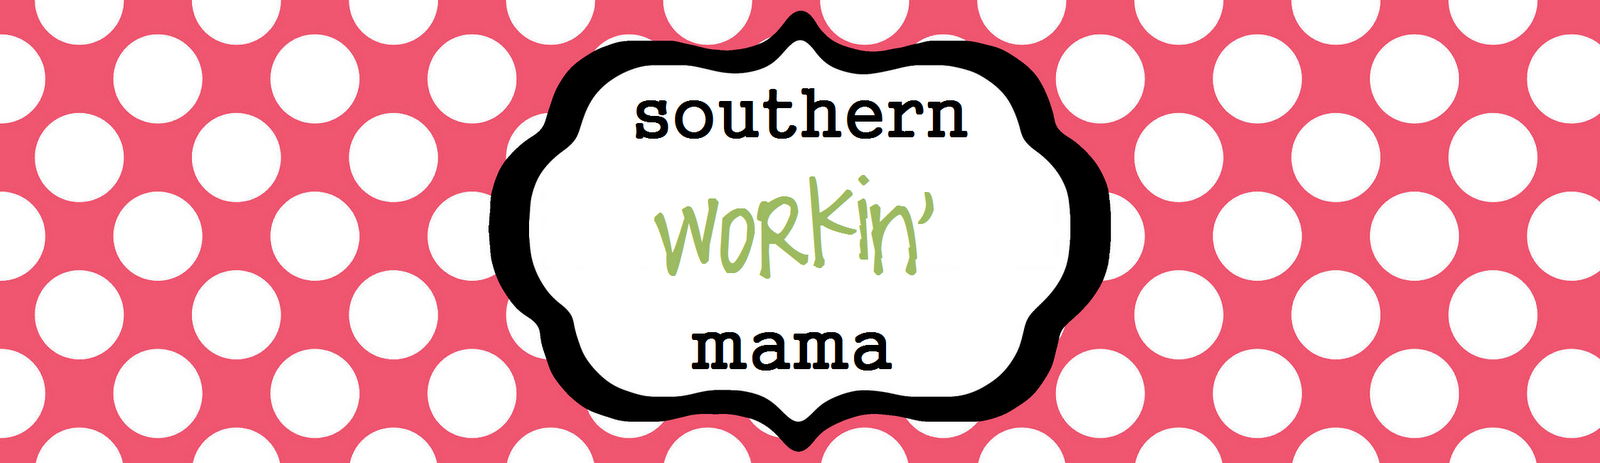 Southern Workin' Mama